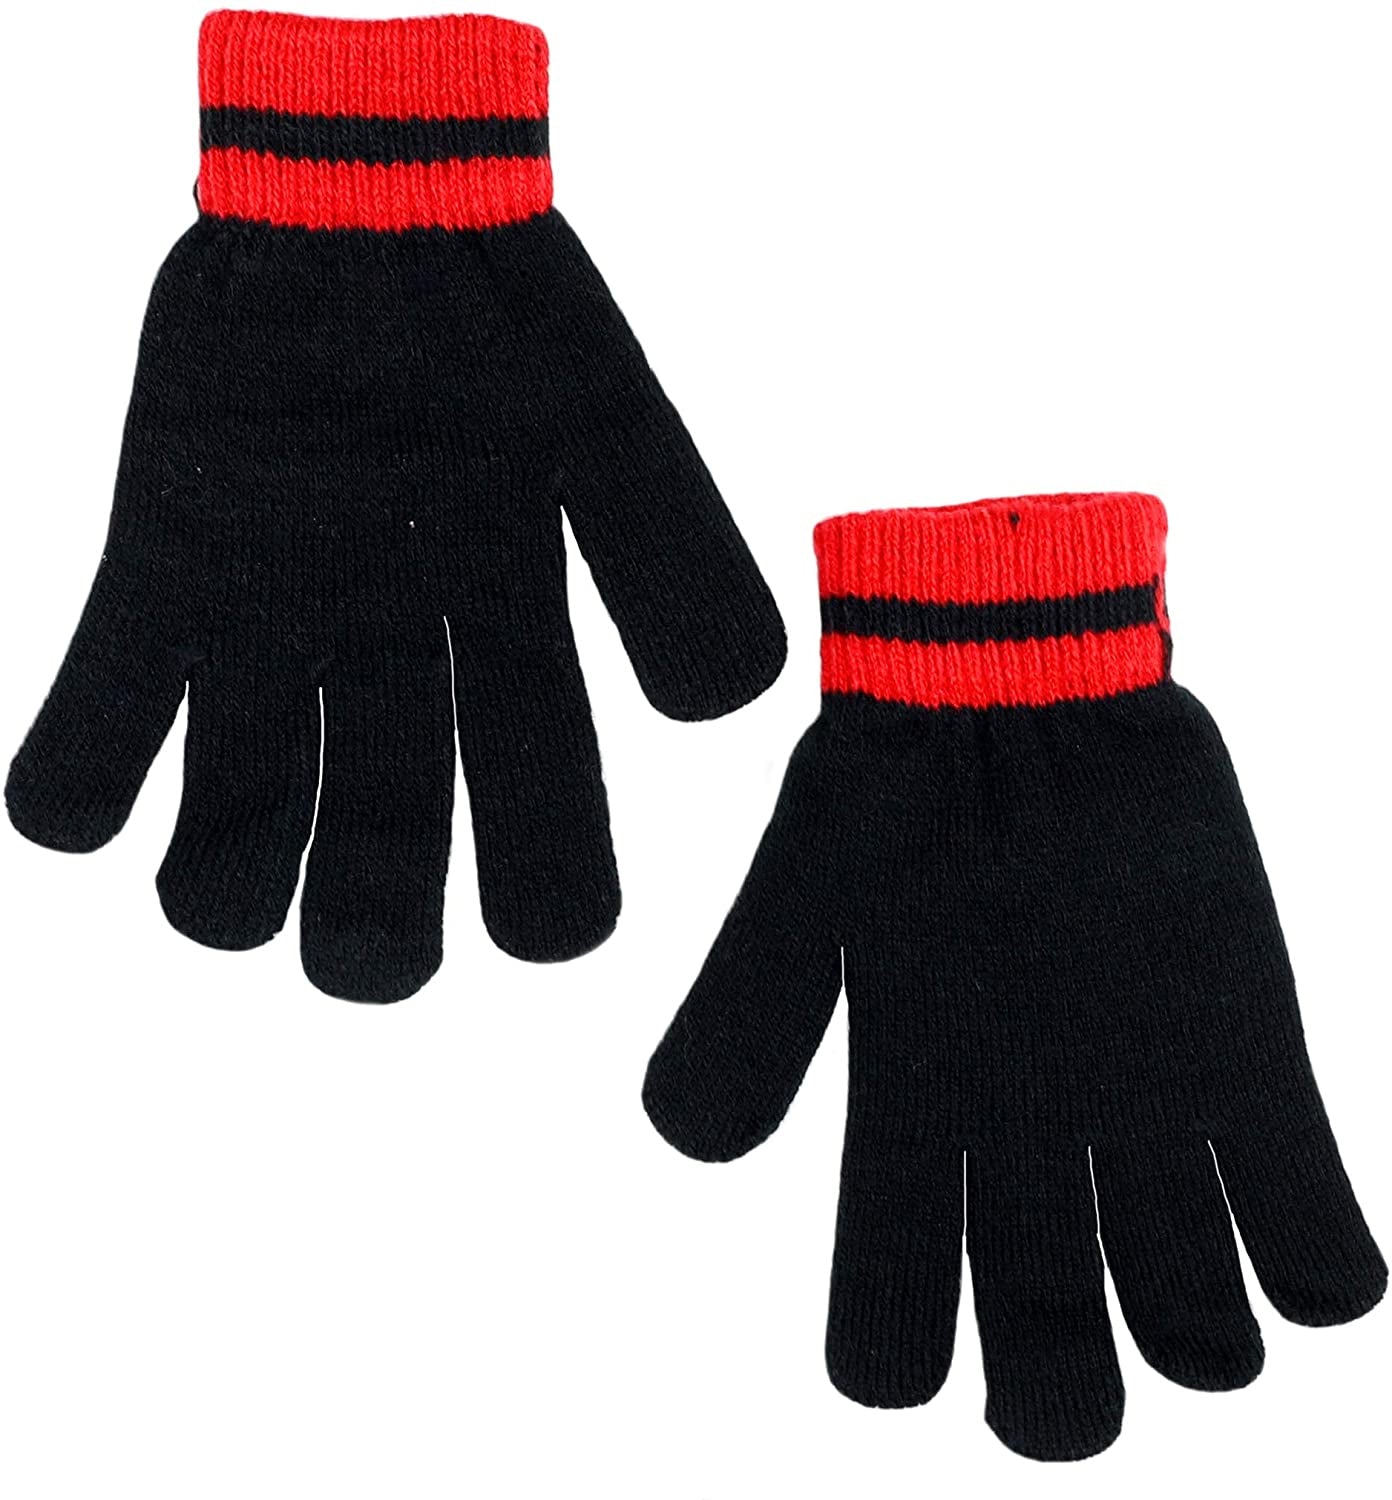 Nintendo Boys 4-7 Mario Brothers Hat Glove Set